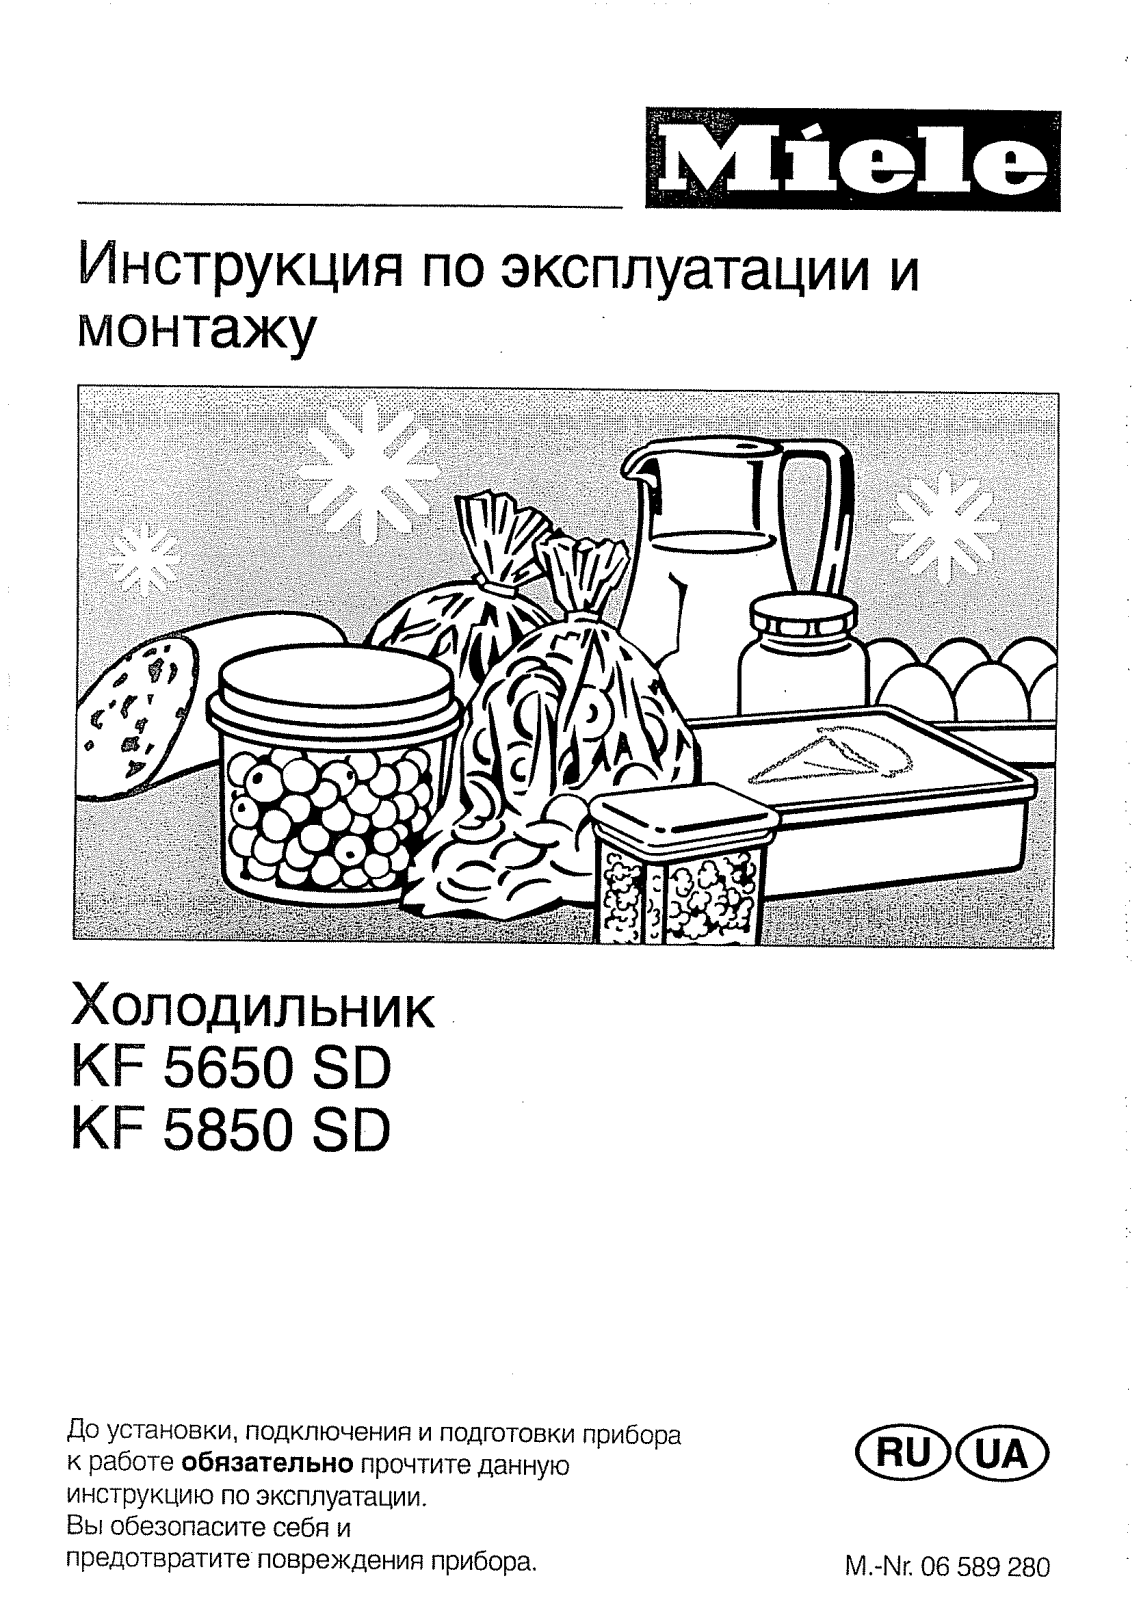 Miele KF 5650 SD User Manual